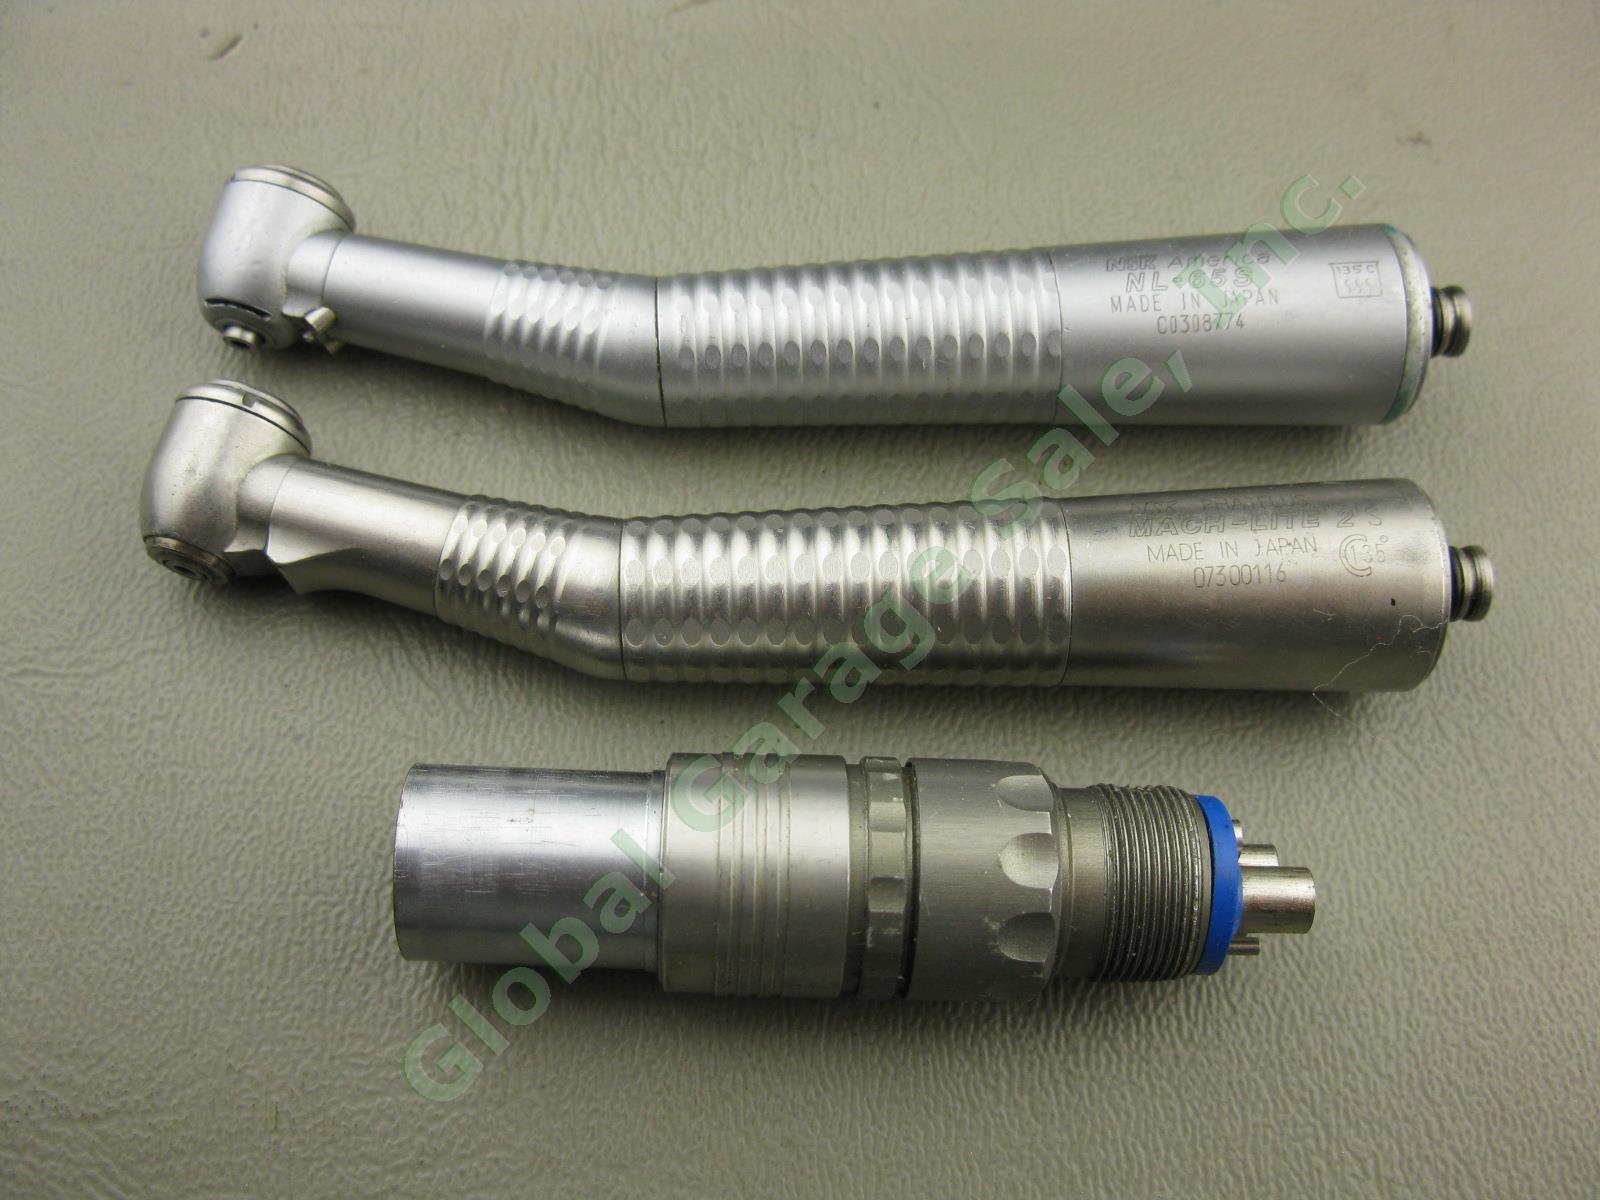 2 NSK High Speed Fiber Optic Dental Handpieces +4-Hole Coupler Connector Adapter